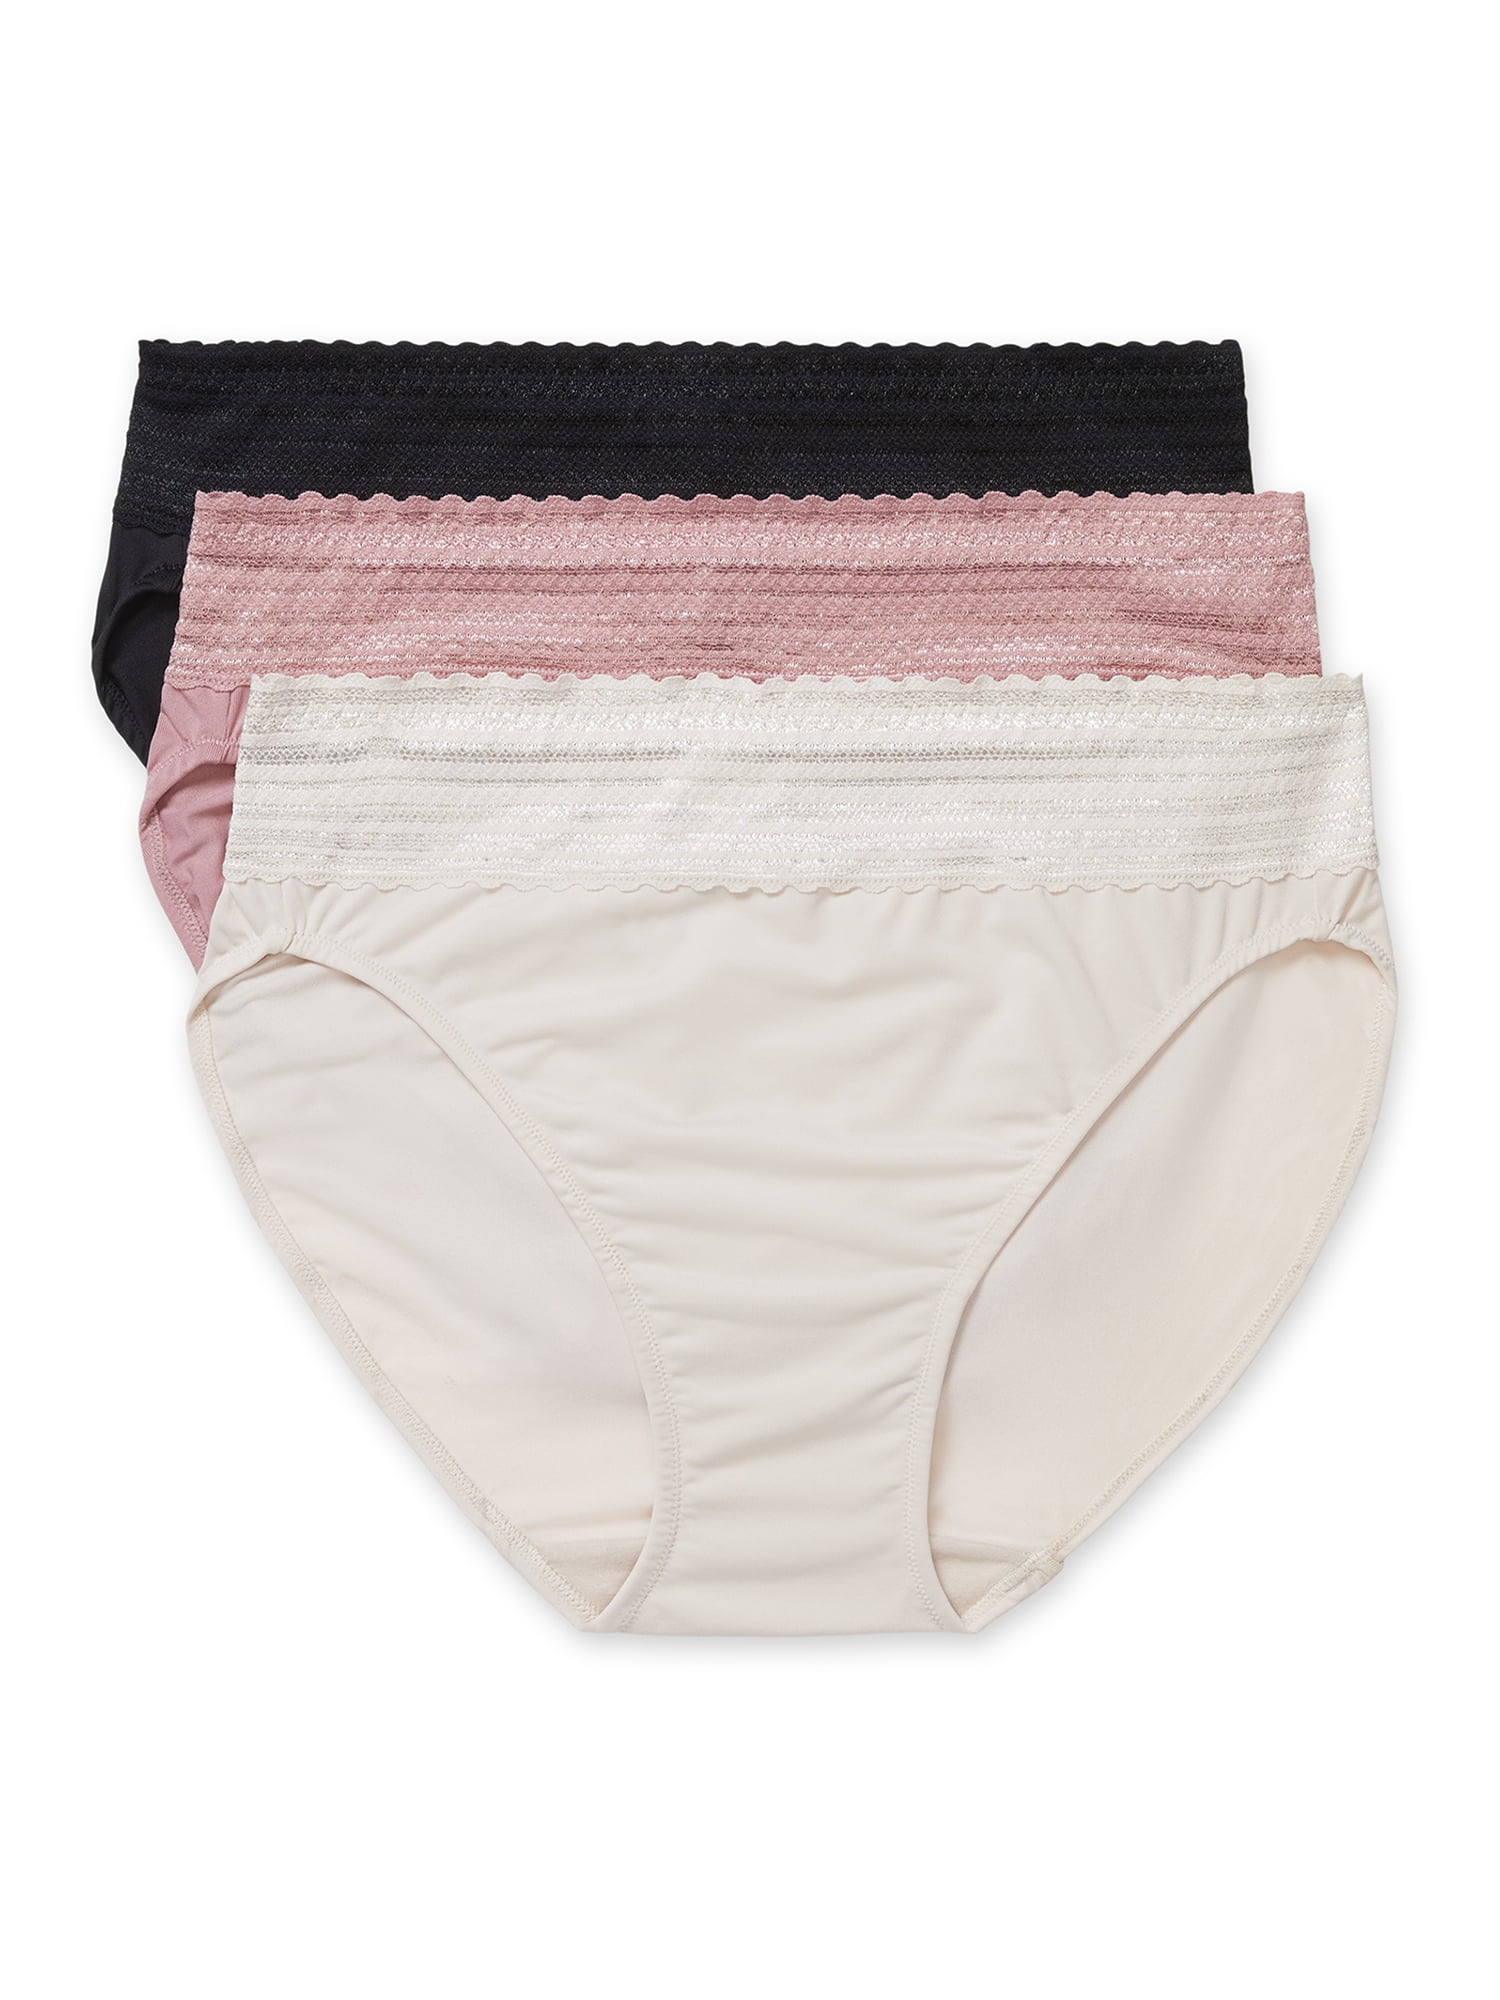 Buy Warner's Women's Blissful Benefits Muffin Top Tailored Hi-Cut Panties  Multipack, BLACK WHITE PINDOT PRINT/WHITE/SMOKED PEARL, S at